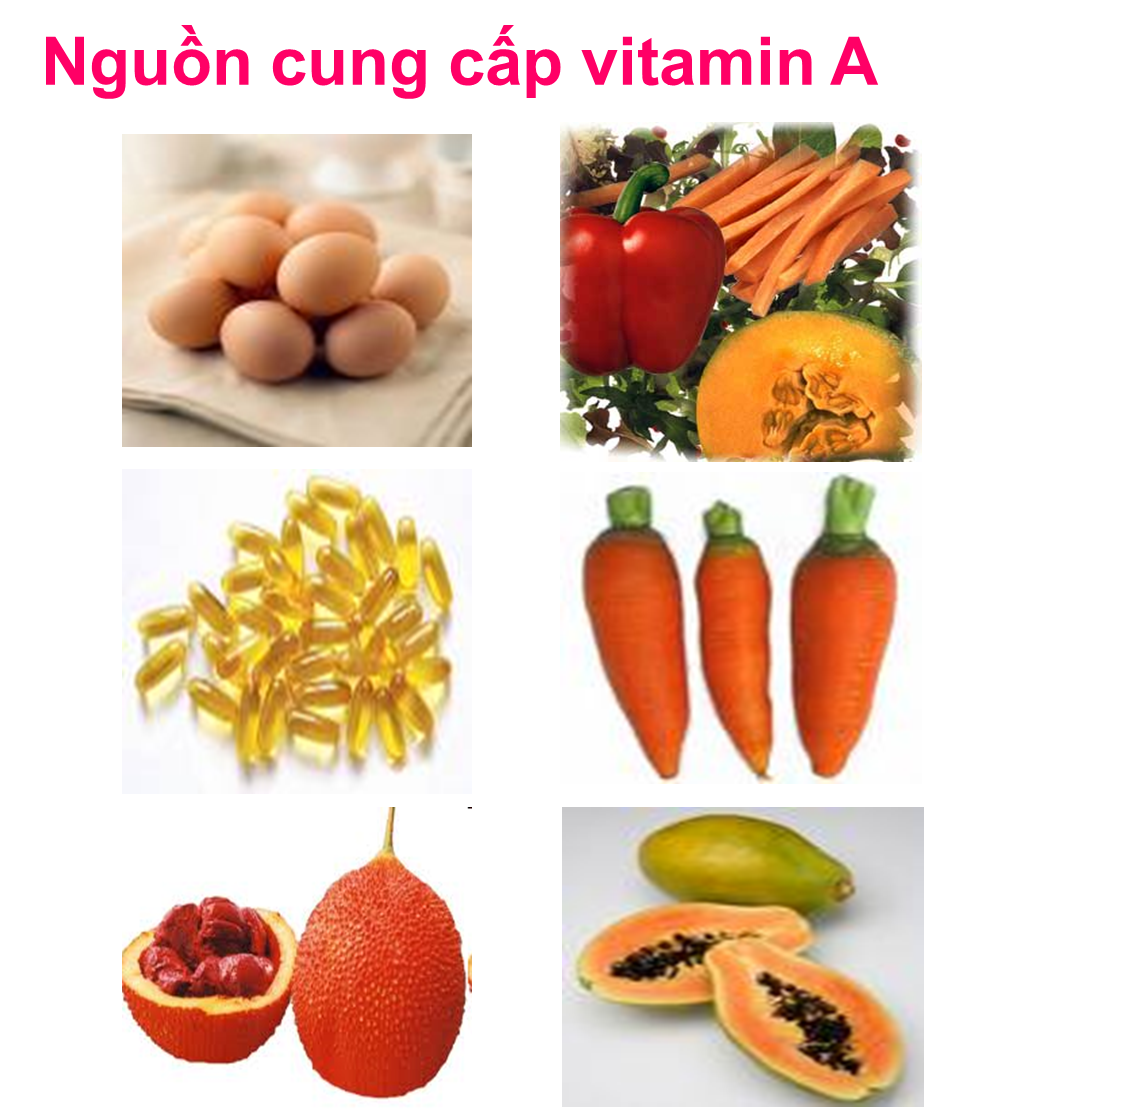 nguồn cung cấp vitamin A